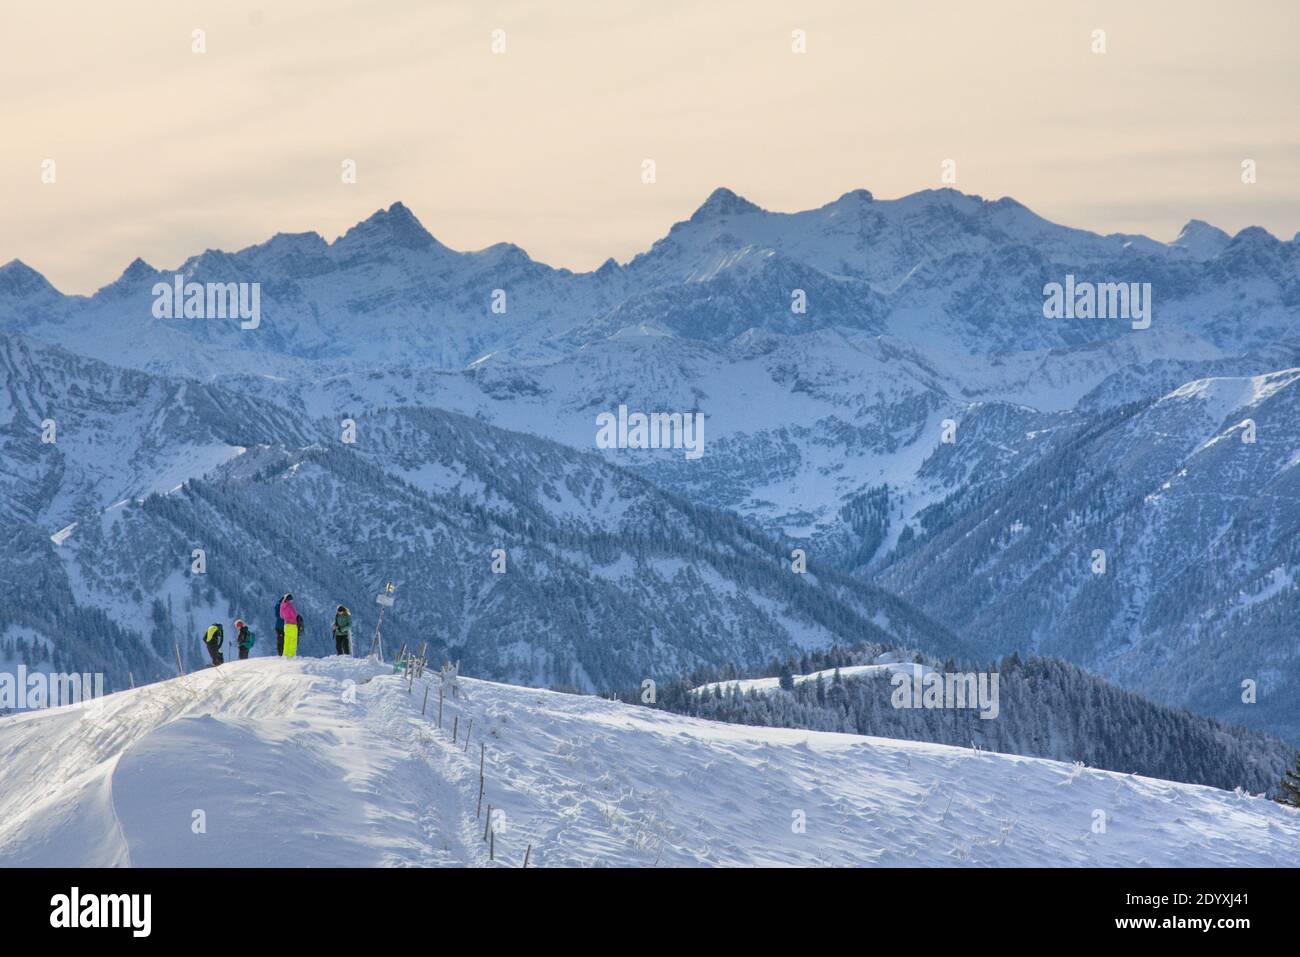 View from the Seekarkreuz peak in the Mangfall mountain range near Lenggries, Bavaria, Germany towards the Karwendel mountain range in the background Stock Photo